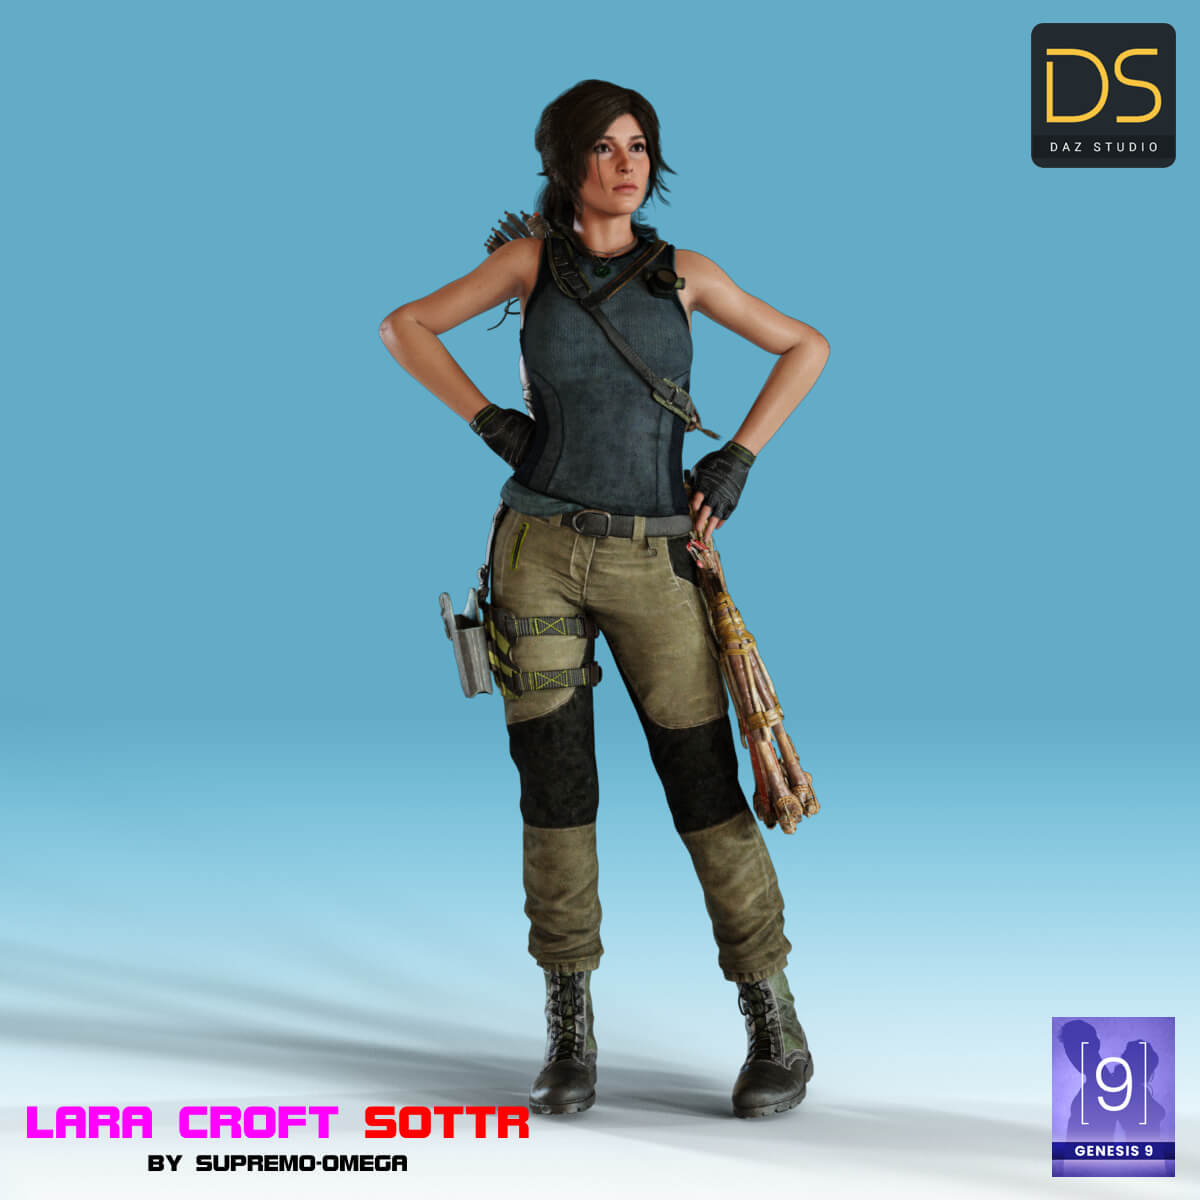 Lara Croft Shadow of The Tomb Raider for G9